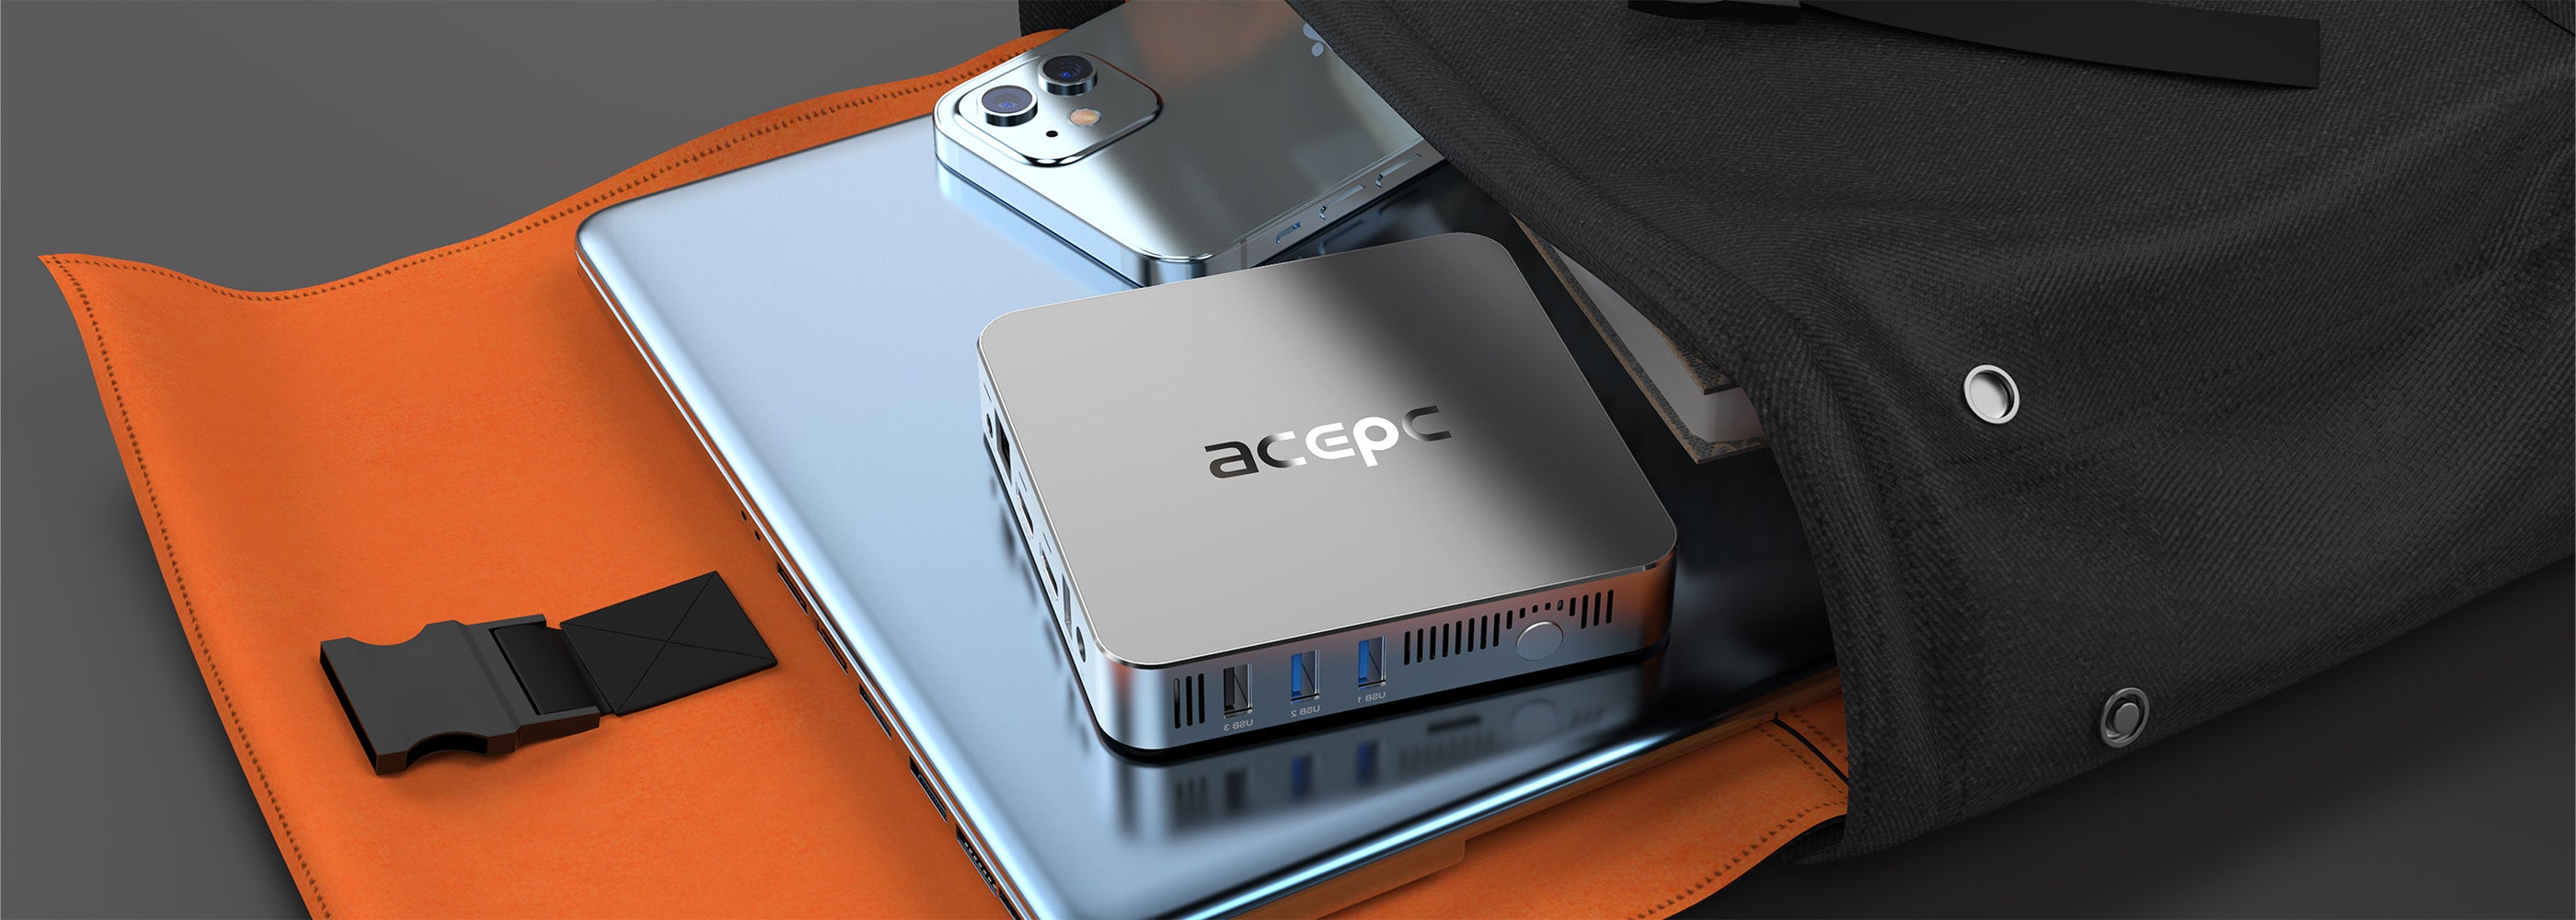 ACEPC Mini Portable PC Home Page